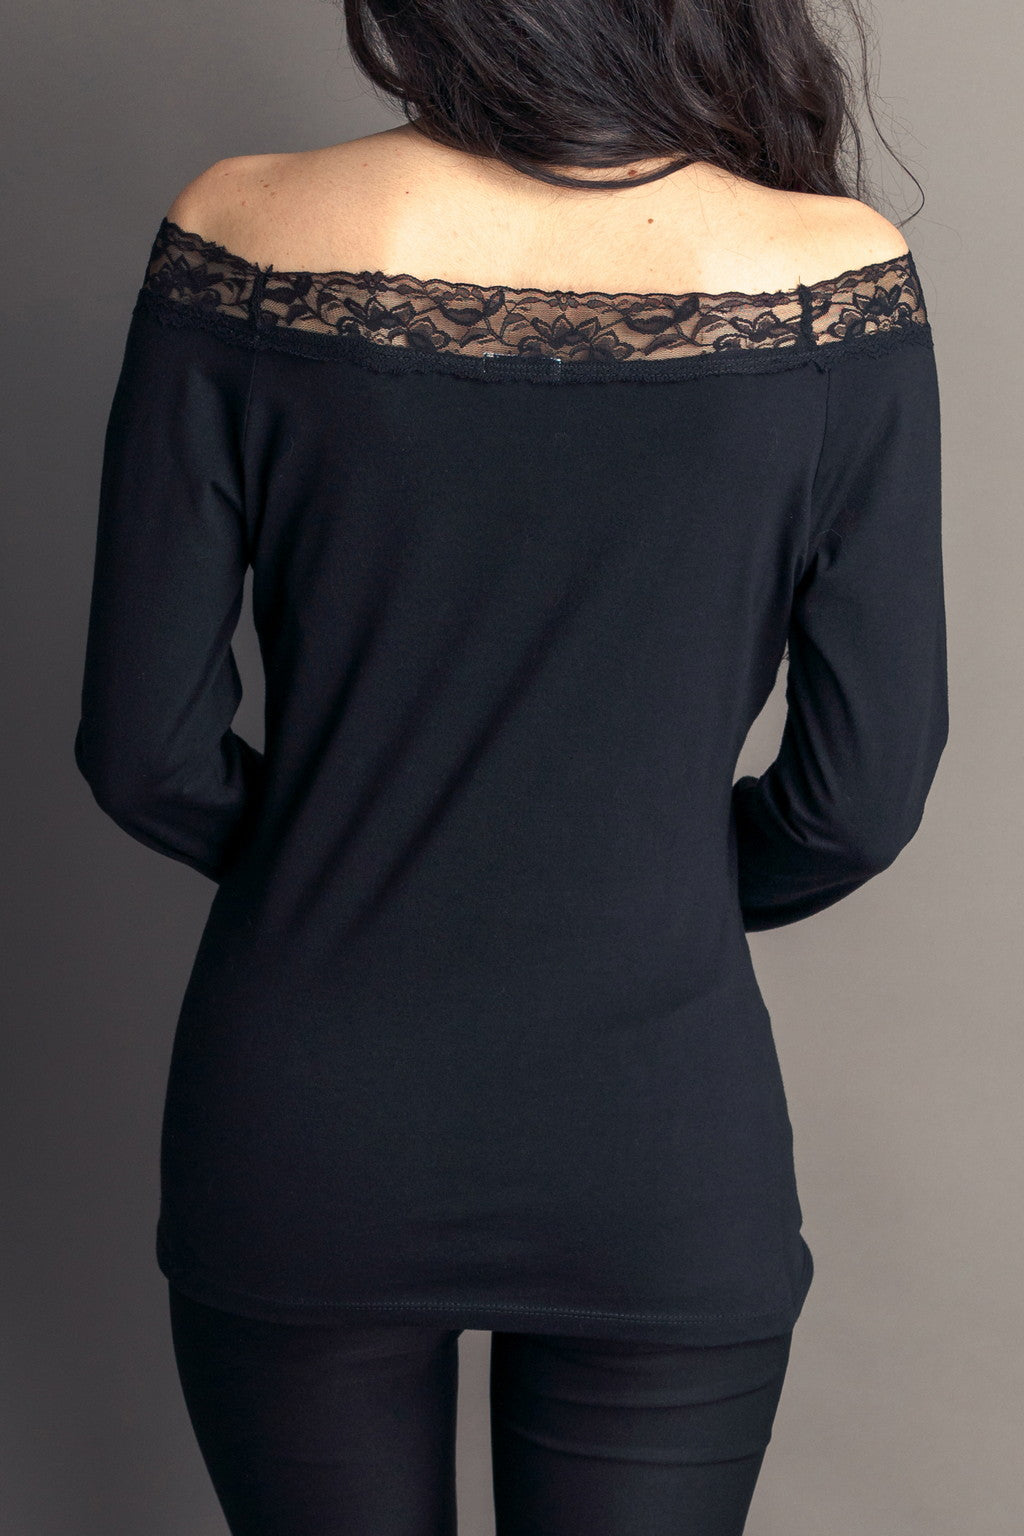 V Neck Feminine Blouse Long Sleeves Elegant Top Casual Blouse Lace Details - back 